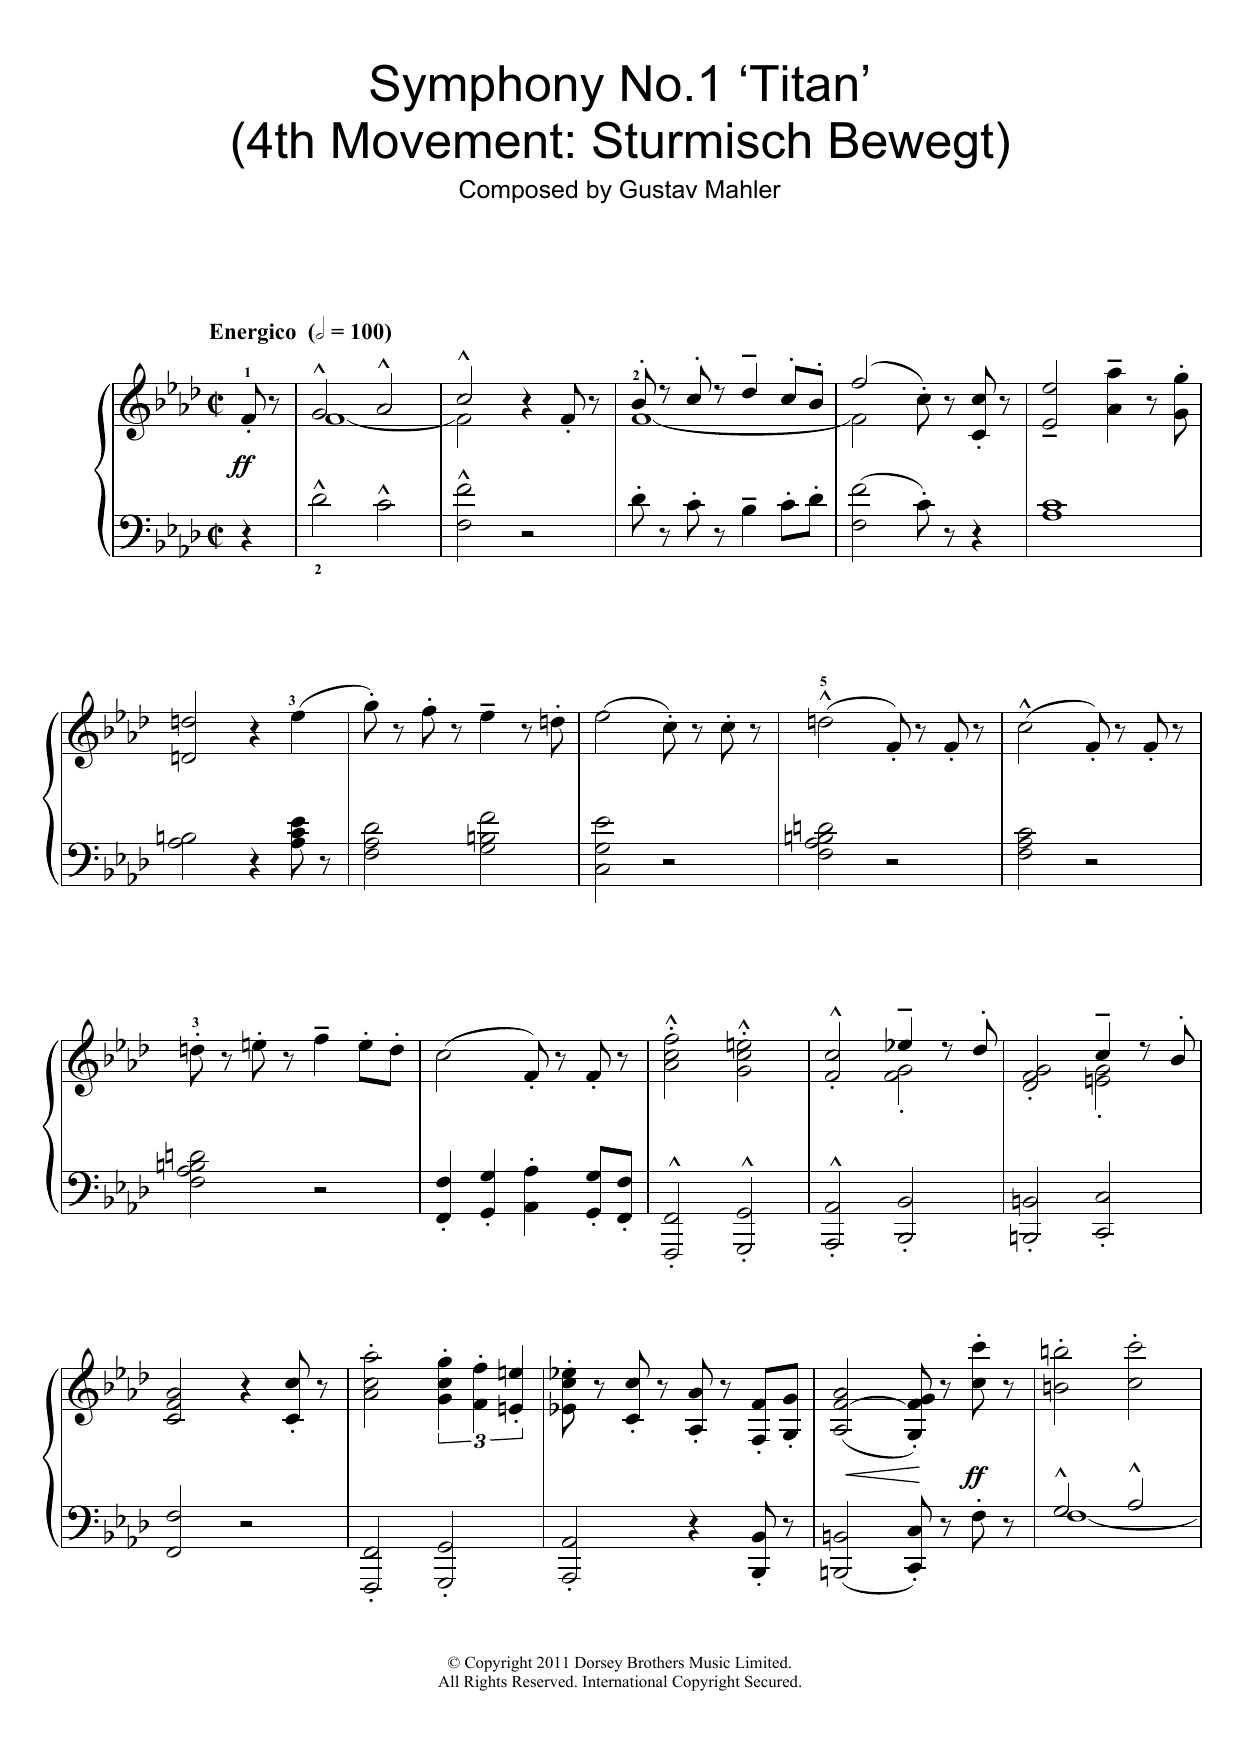 Gustav Mahler Symphony No.1 'Titan' (4th Movement: Sturmisch Bewegt) Sheet Music Notes & Chords for Piano - Download or Print PDF